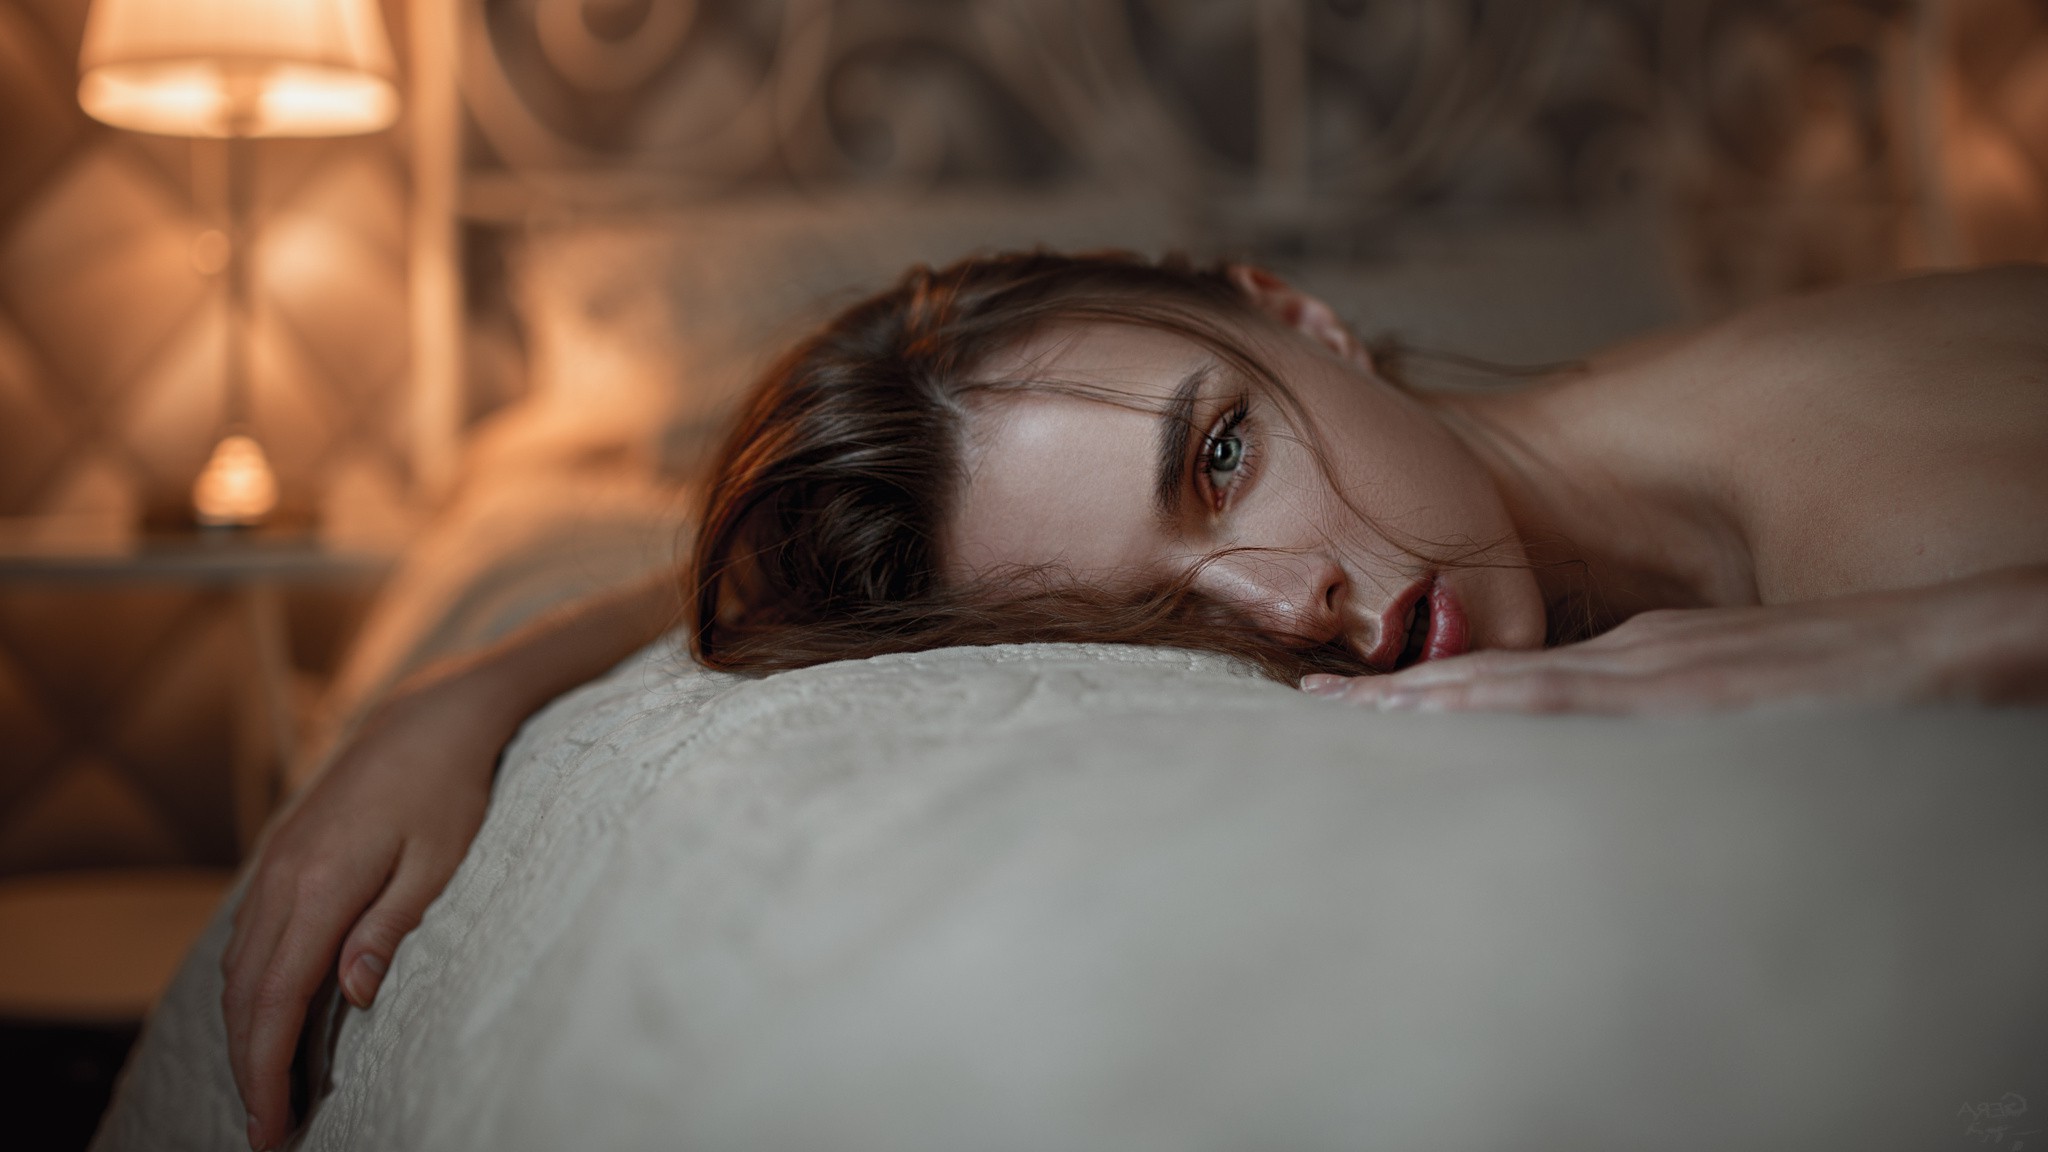 women, Brunette, Blue Eyes, In Bed, Lying On Front, Open Mouth, Bare Shoulders, Face, Georgy Chernyadyev, Portrait, Emotional Wallpaper